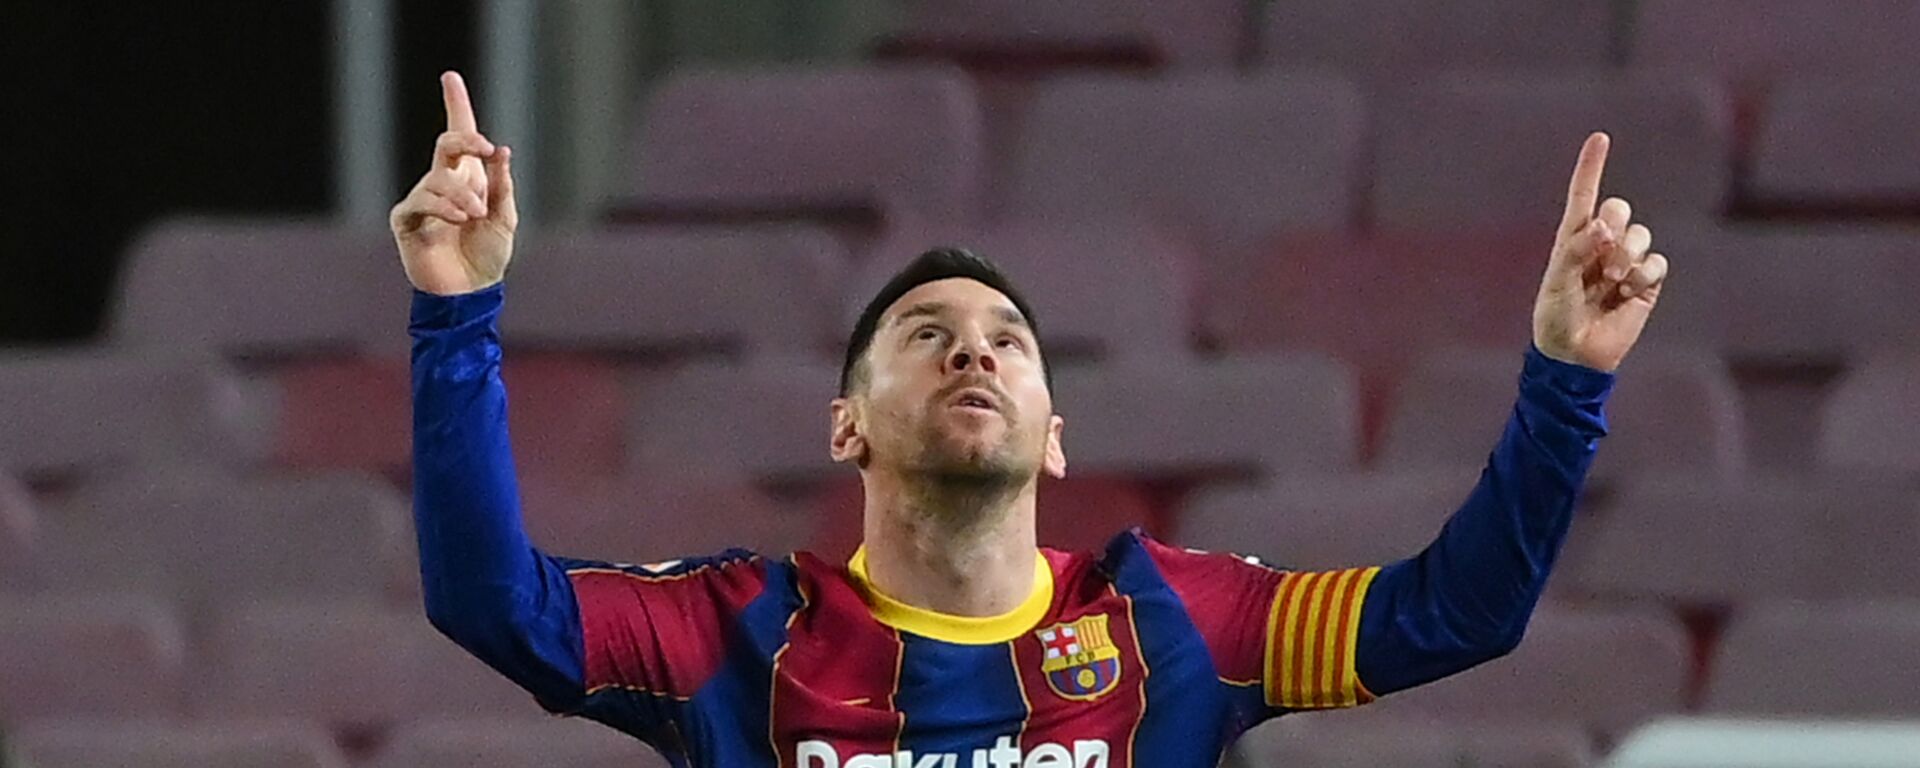 Lionel Messi, jugador del FC Barcelona, celebrando un gol contra el Athletic de Bilbao - Sputnik Mundo, 1920, 01.02.2021